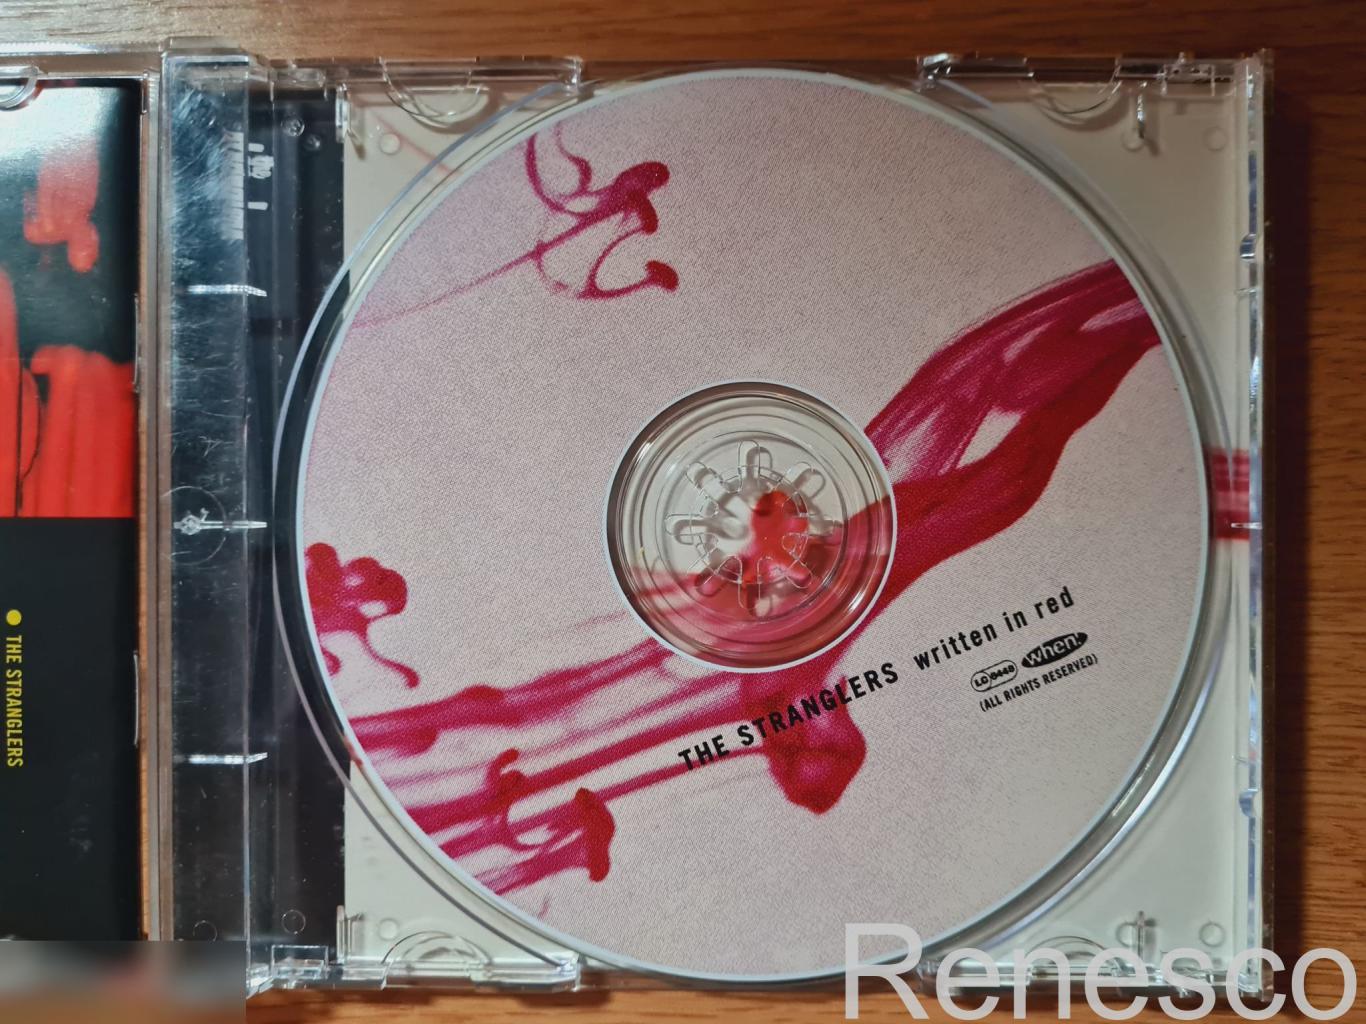 The Stranglers ?– Written In Red (UK) (1997) 4